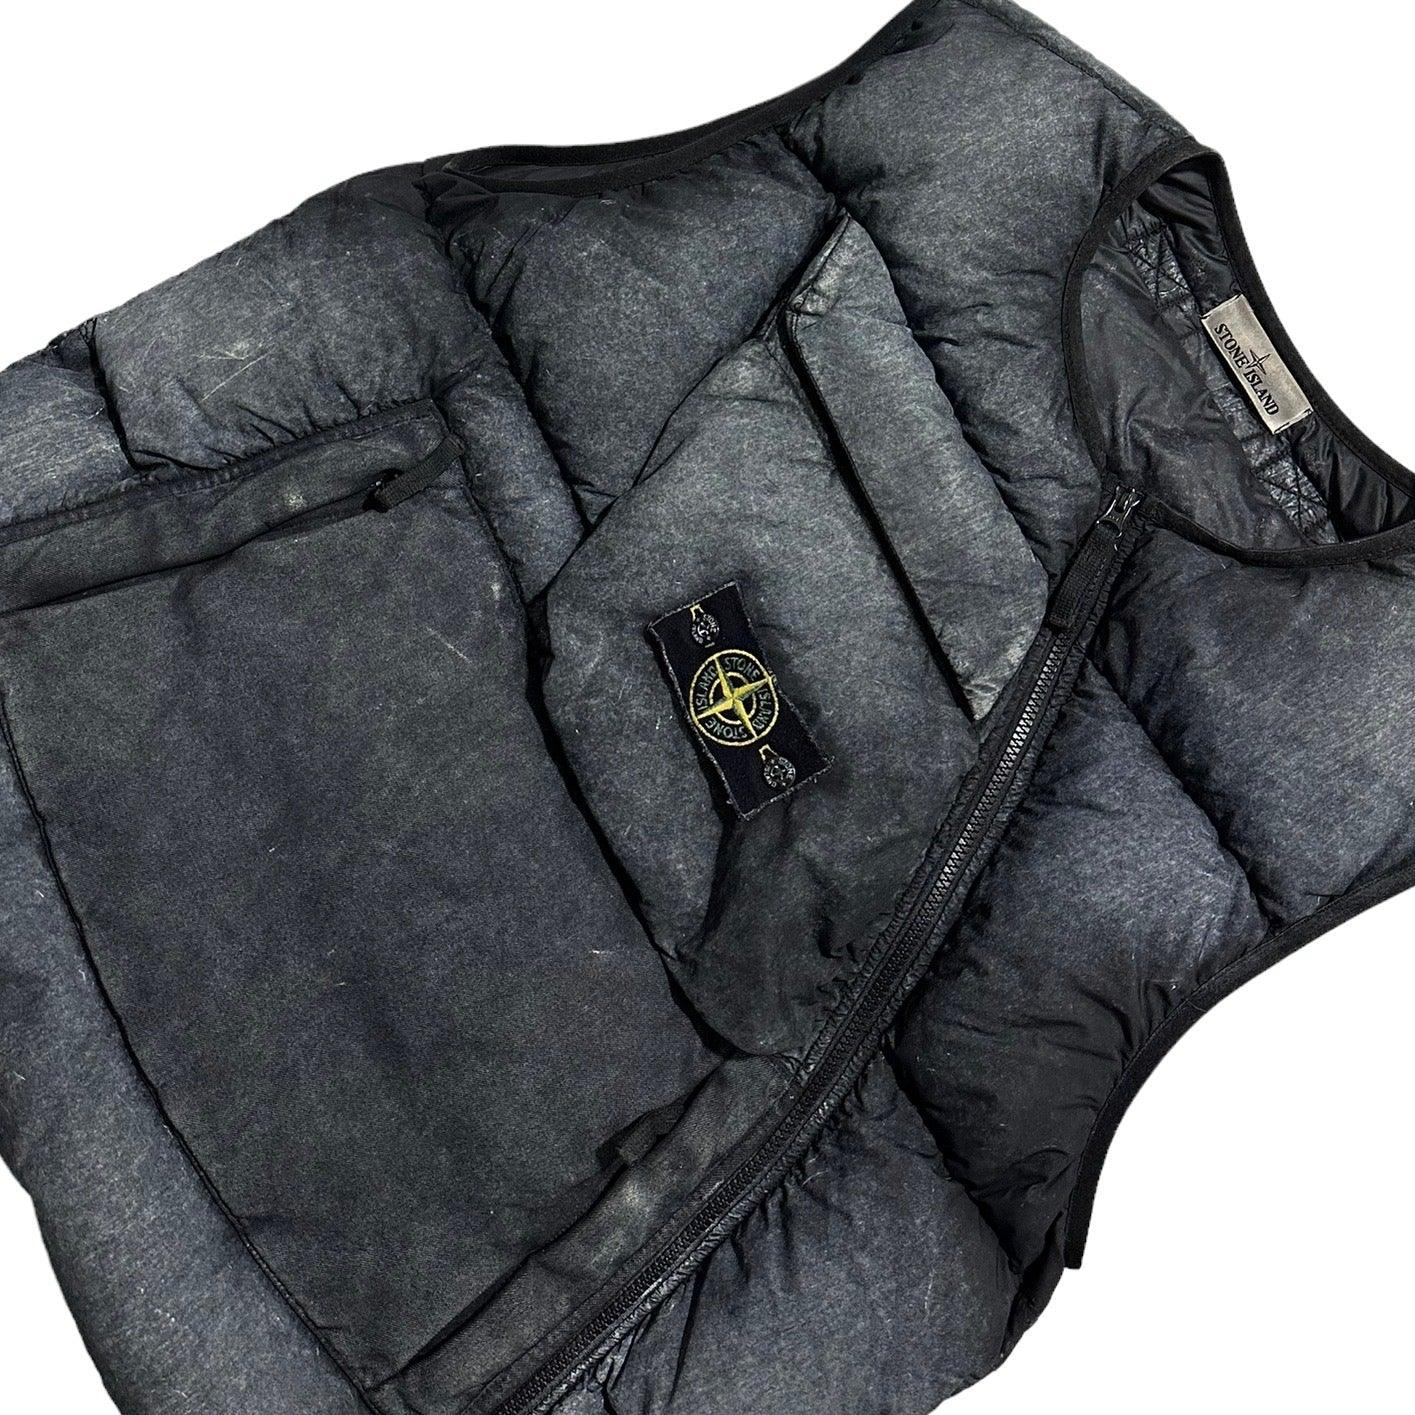 Stone Island Frost Tela Nylon Down Vest with Asymmetrical Zip - Known Source